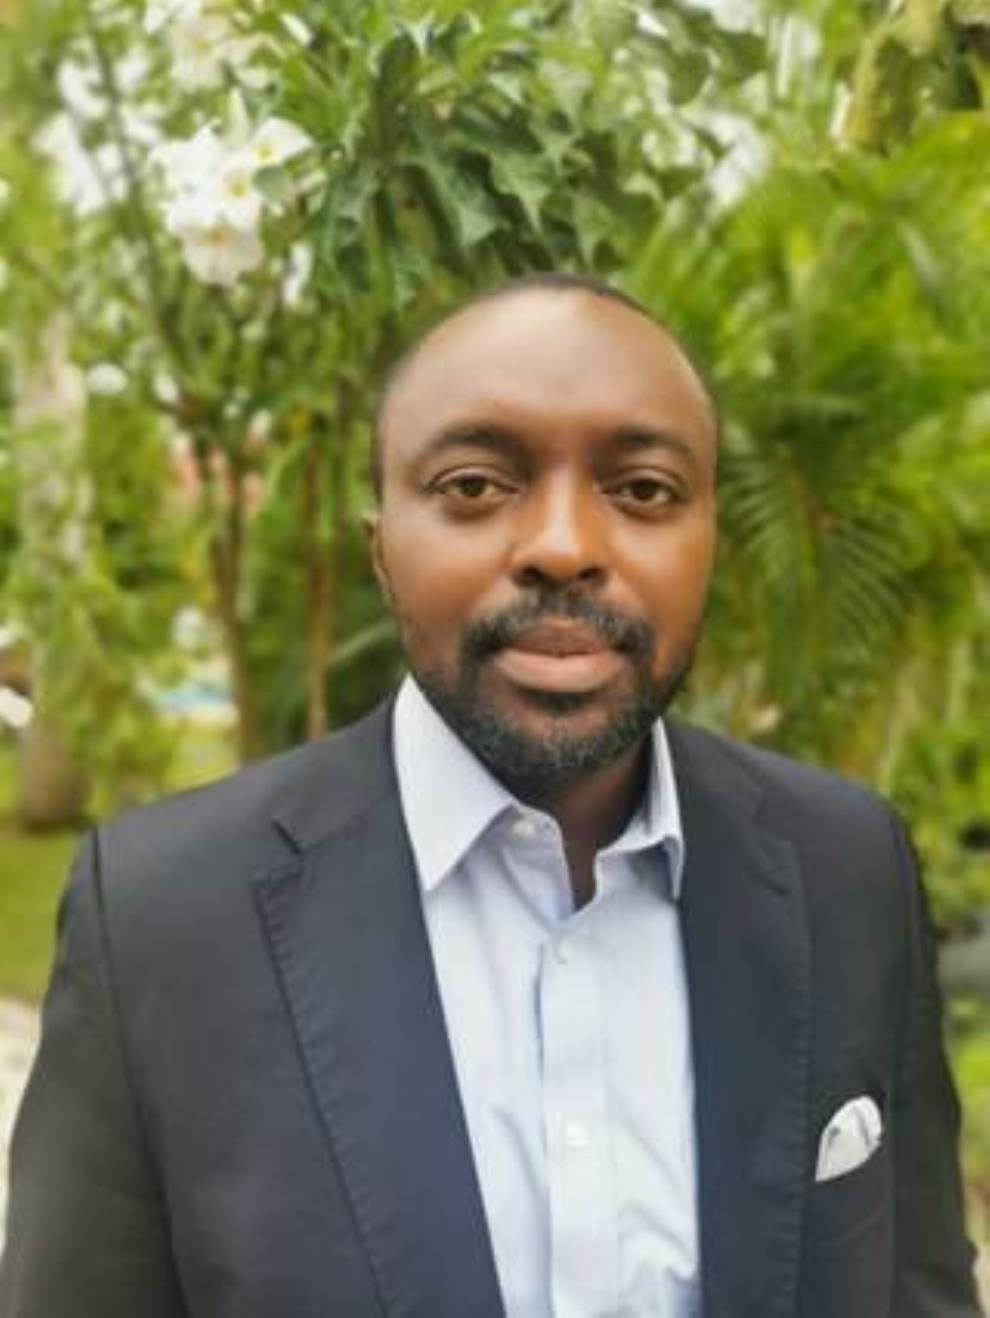 Abdulai Awudu, General Manager of Joy Learning